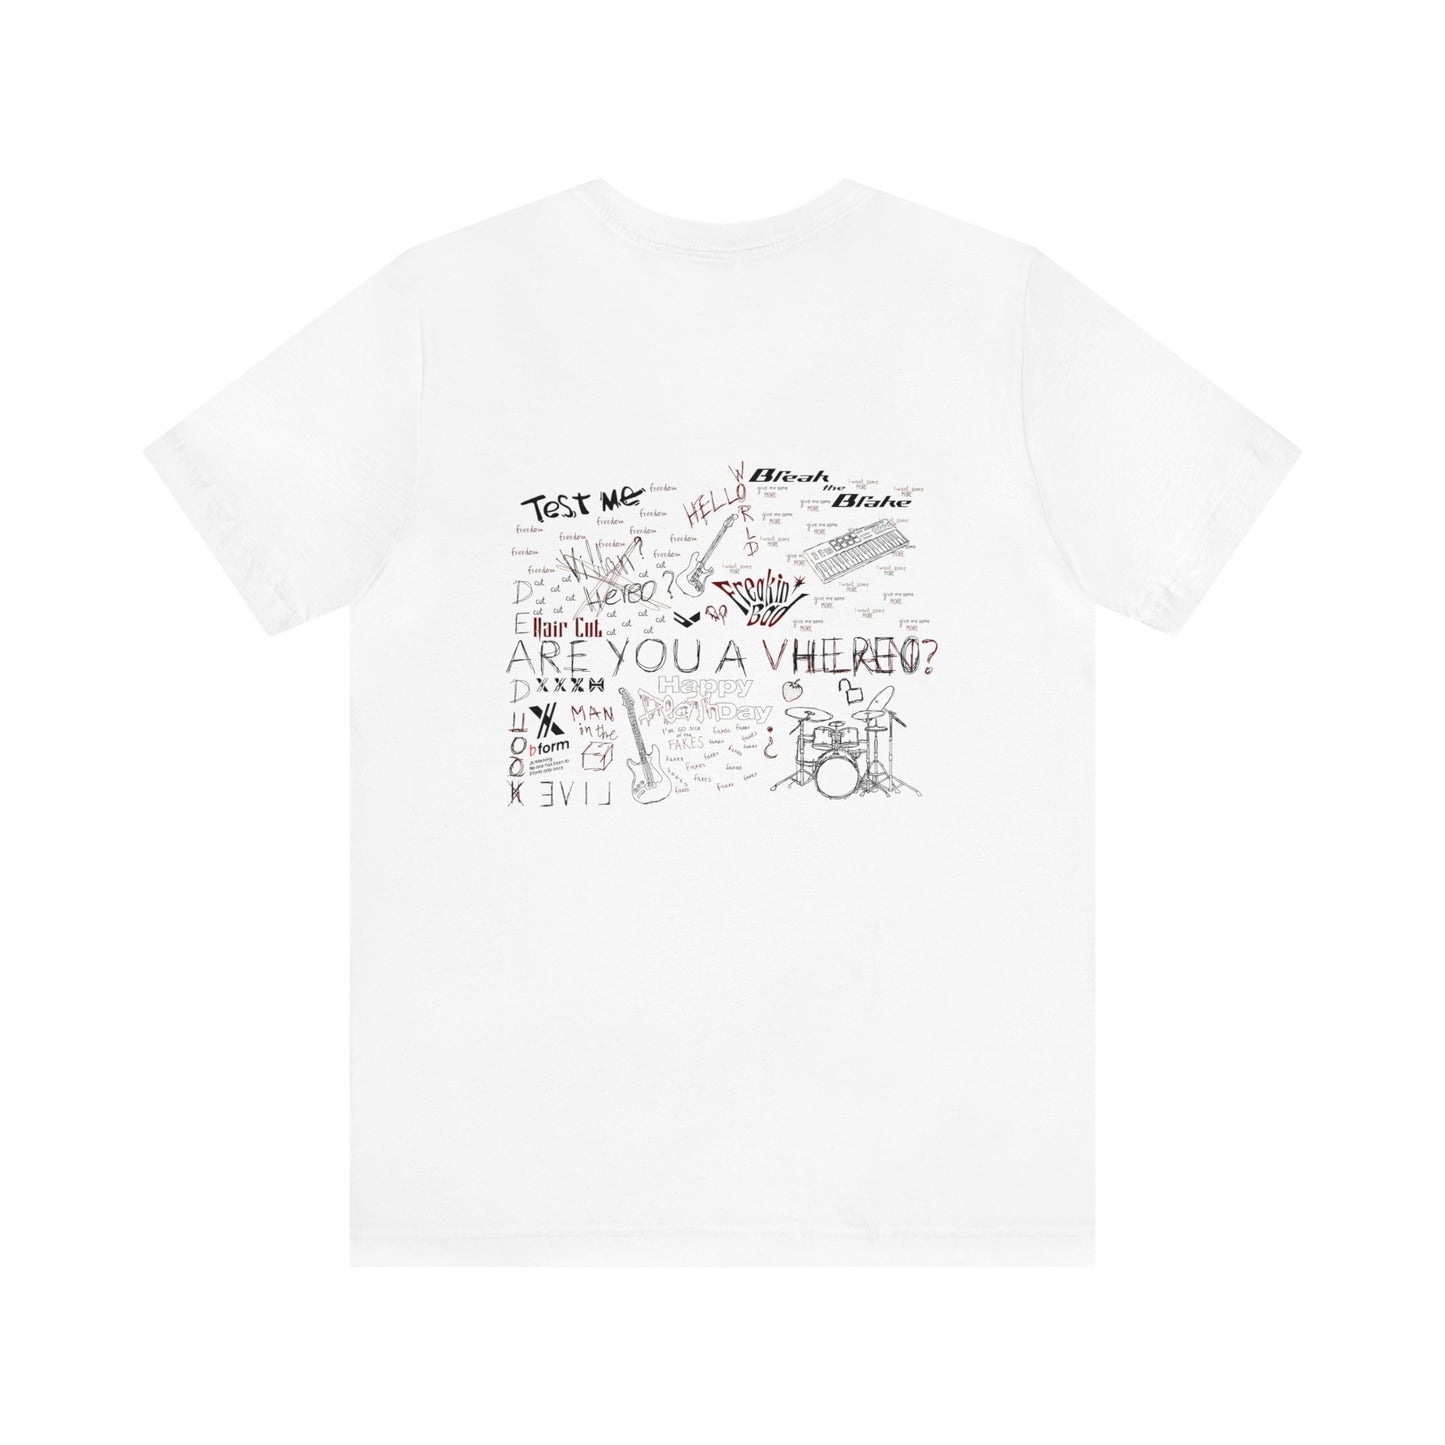 T-shirt - XV